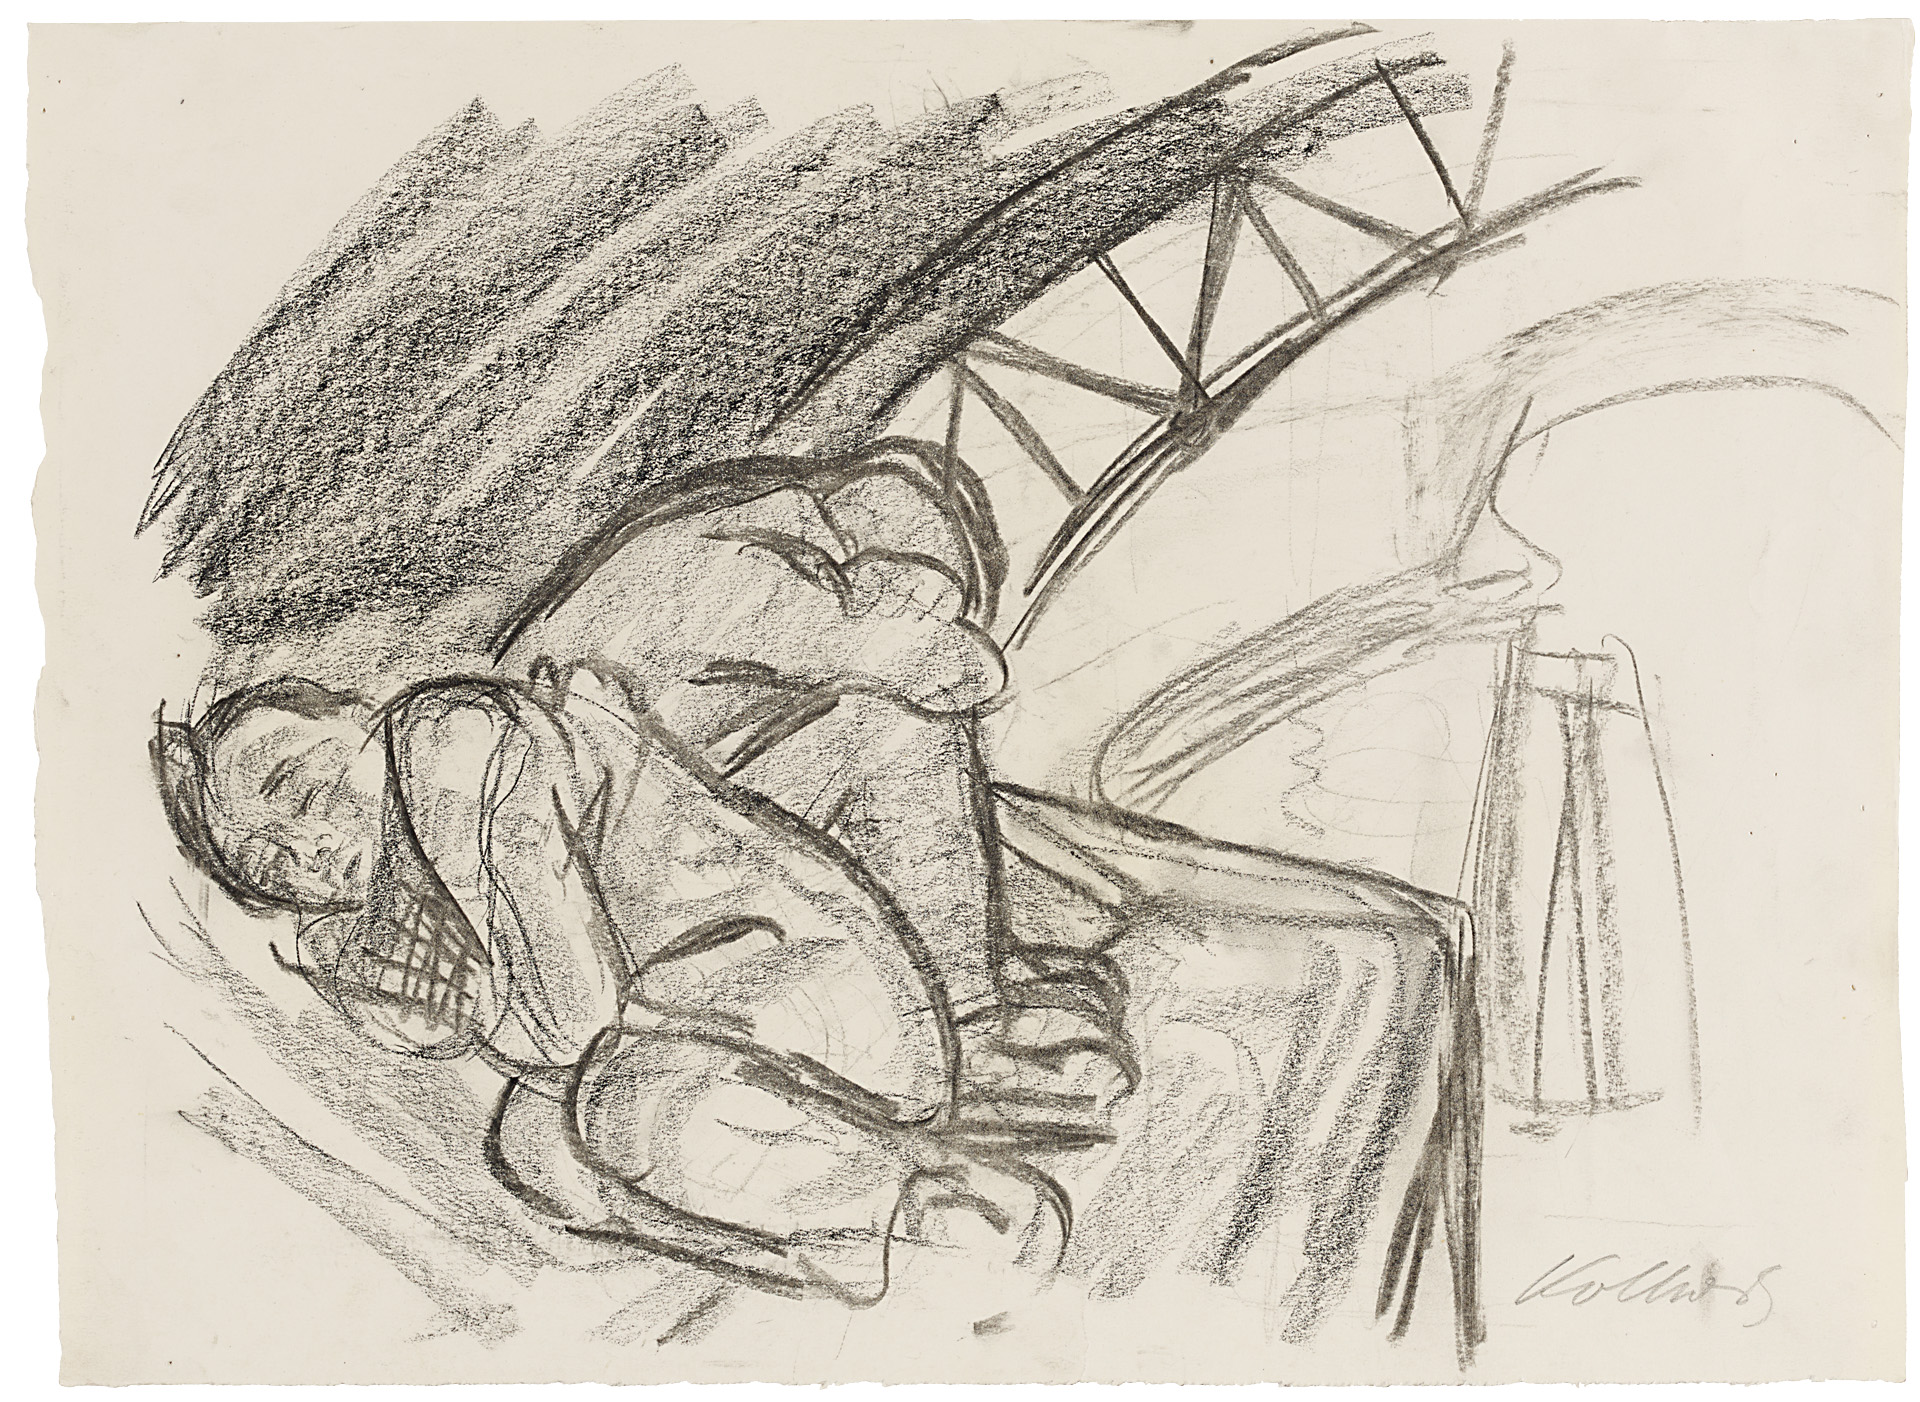 Käthe Kollwitz, Under the Arch of the Bridge, 1928, charcoal and black crayon, blotted, on drawing paper, NT 1161, Cologne Kollwitz Collection © Käthe Kollwitz Museum Köln